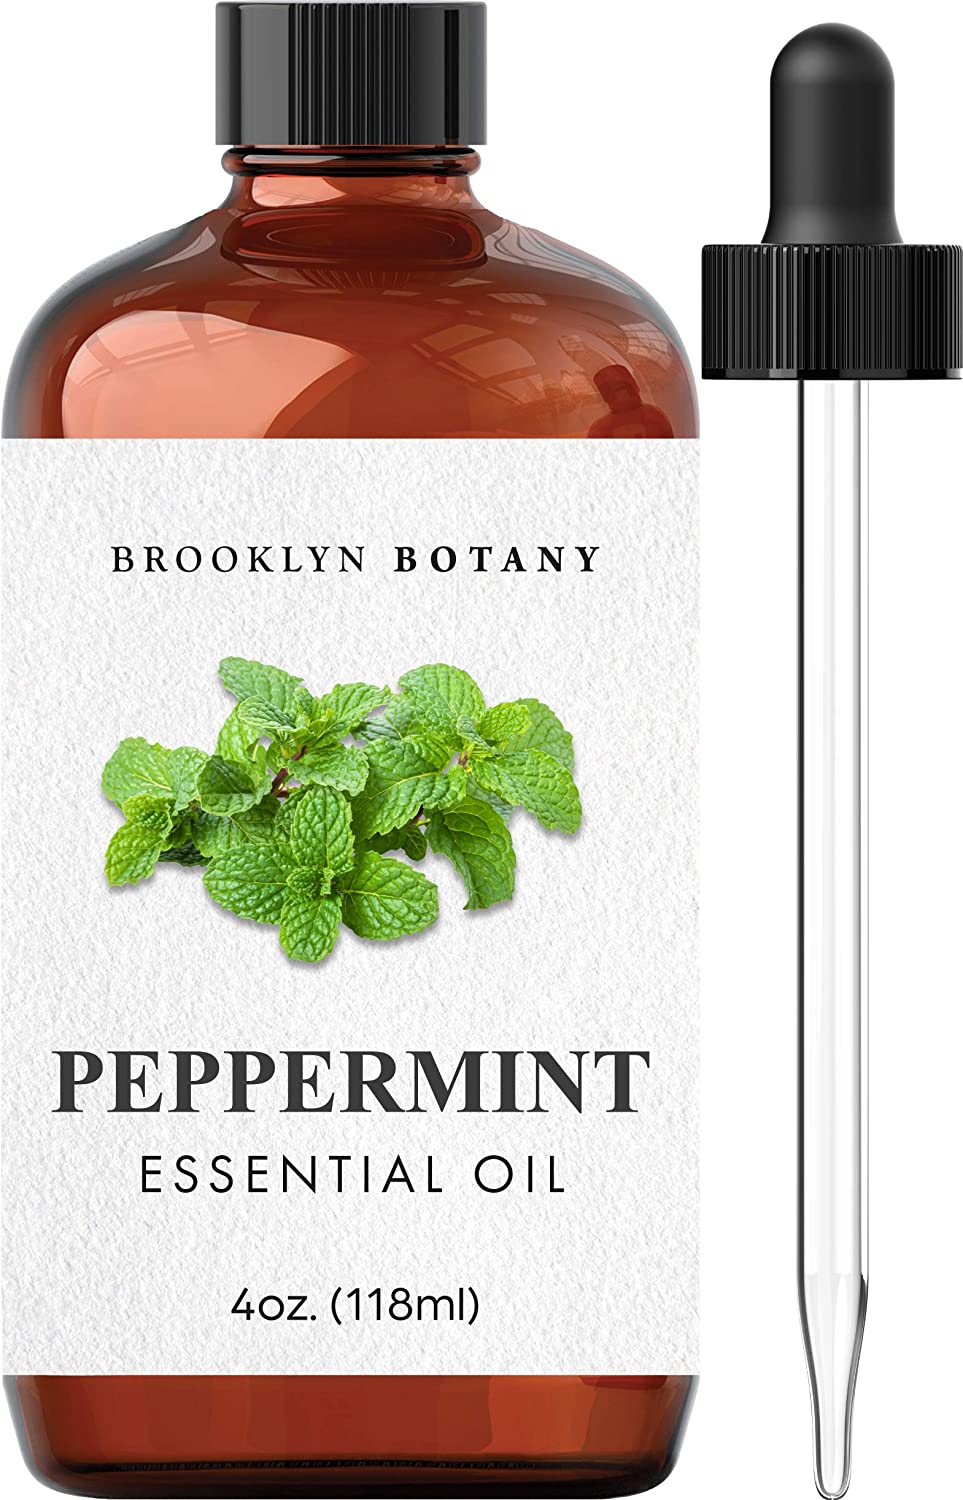 Brooklyn Botany Peppermint Essential Oil 